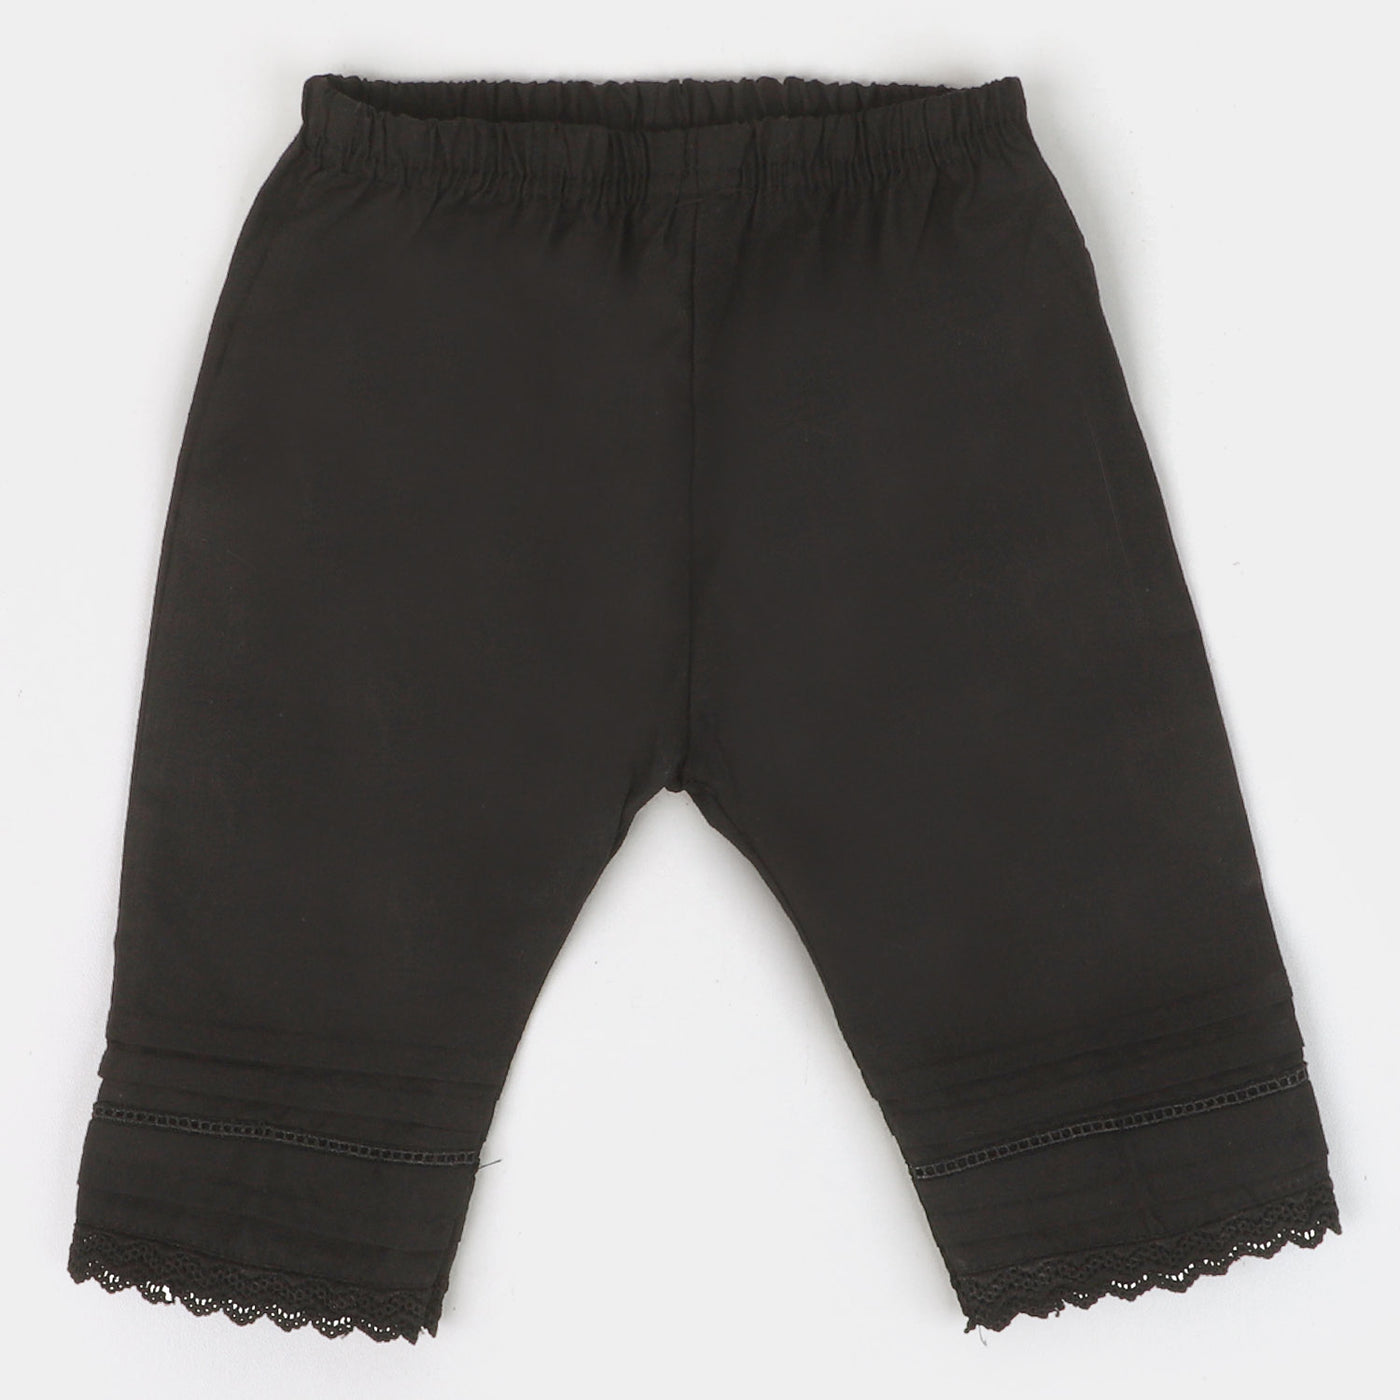 Infant Girls Cotton Pant Pleat With Lace - BLACK